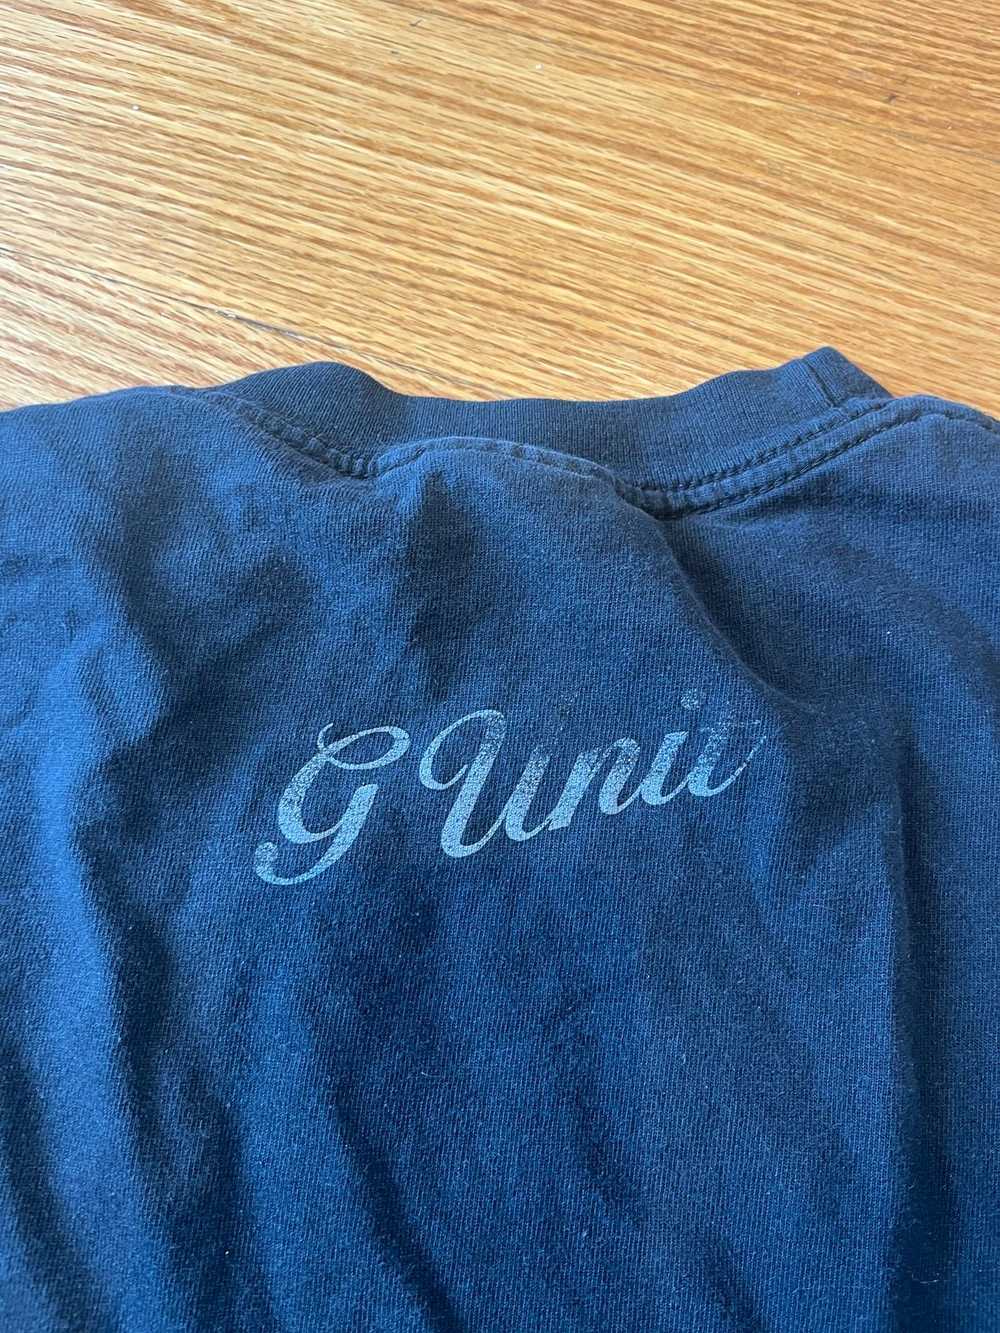 G Unit × Vintage G Unit Logo Tee - image 4